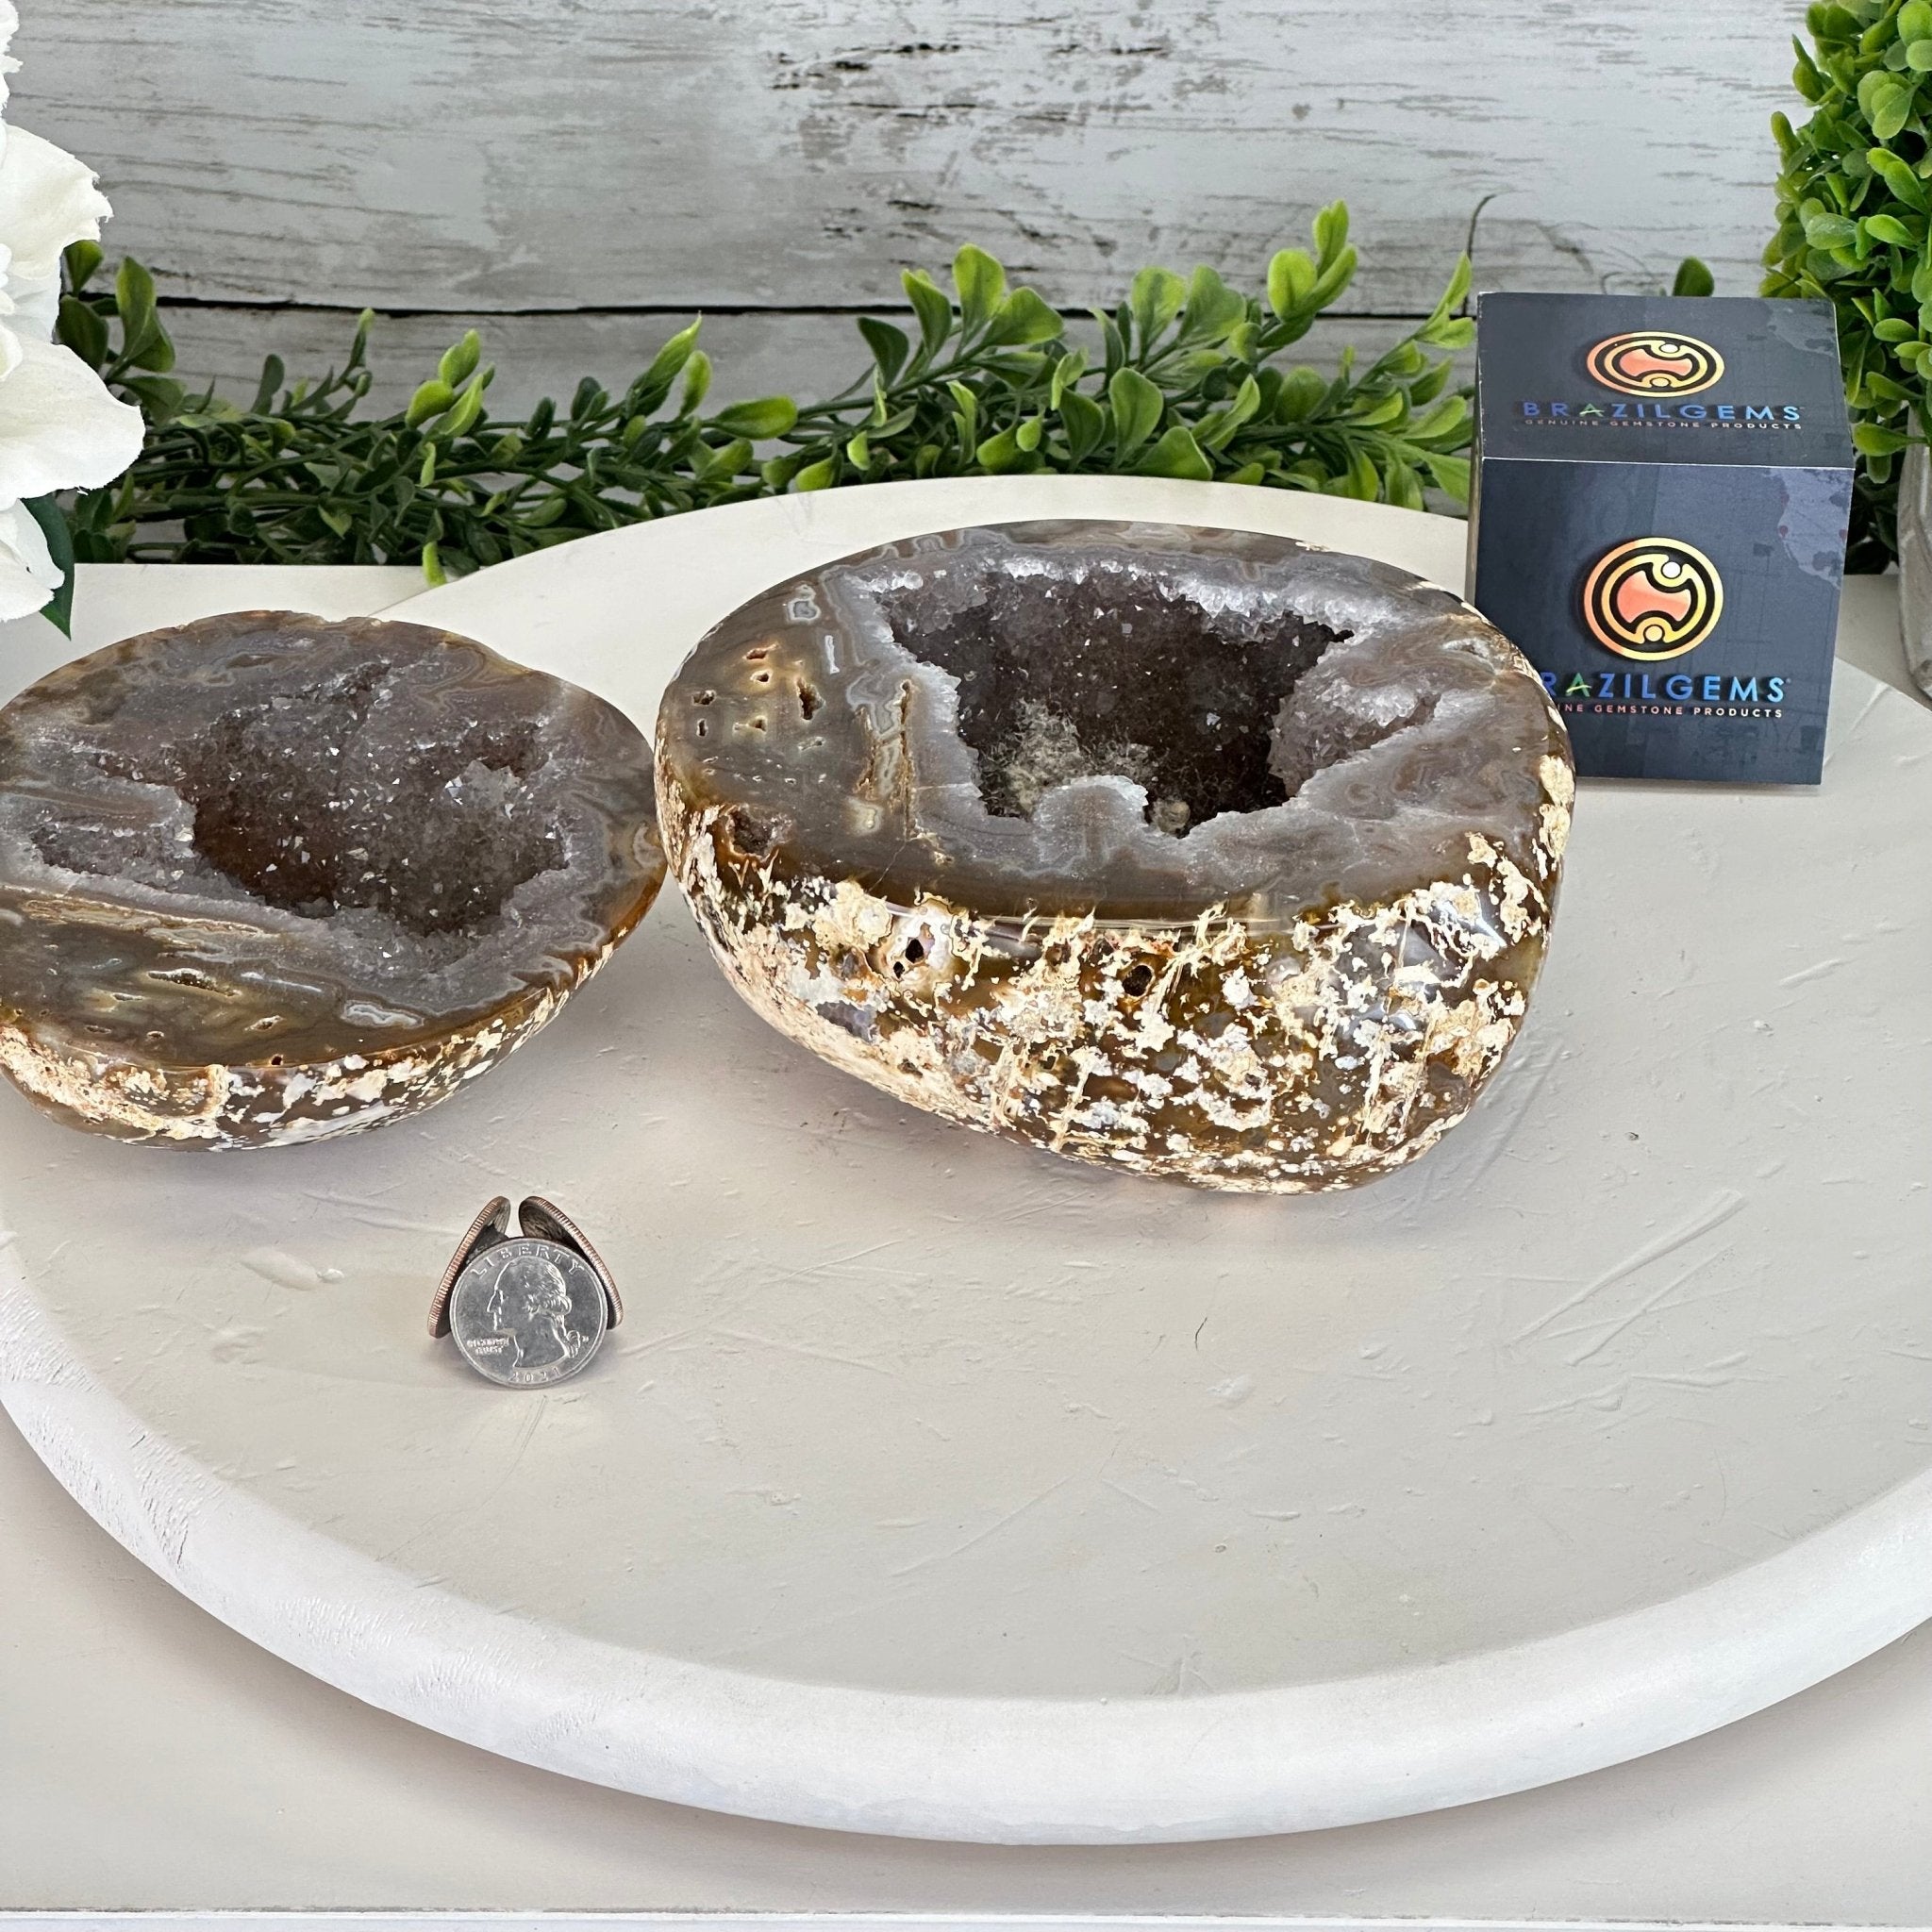 Quality Agate Geode "Jewelry Box", 4.9 lbs & 4.3" Tall #5251-0010 - Brazil GemsBrazil GemsQuality Agate Geode "Jewelry Box", 4.9 lbs & 4.3" Tall #5251-0010Agate Jewelry Boxes5251-0010